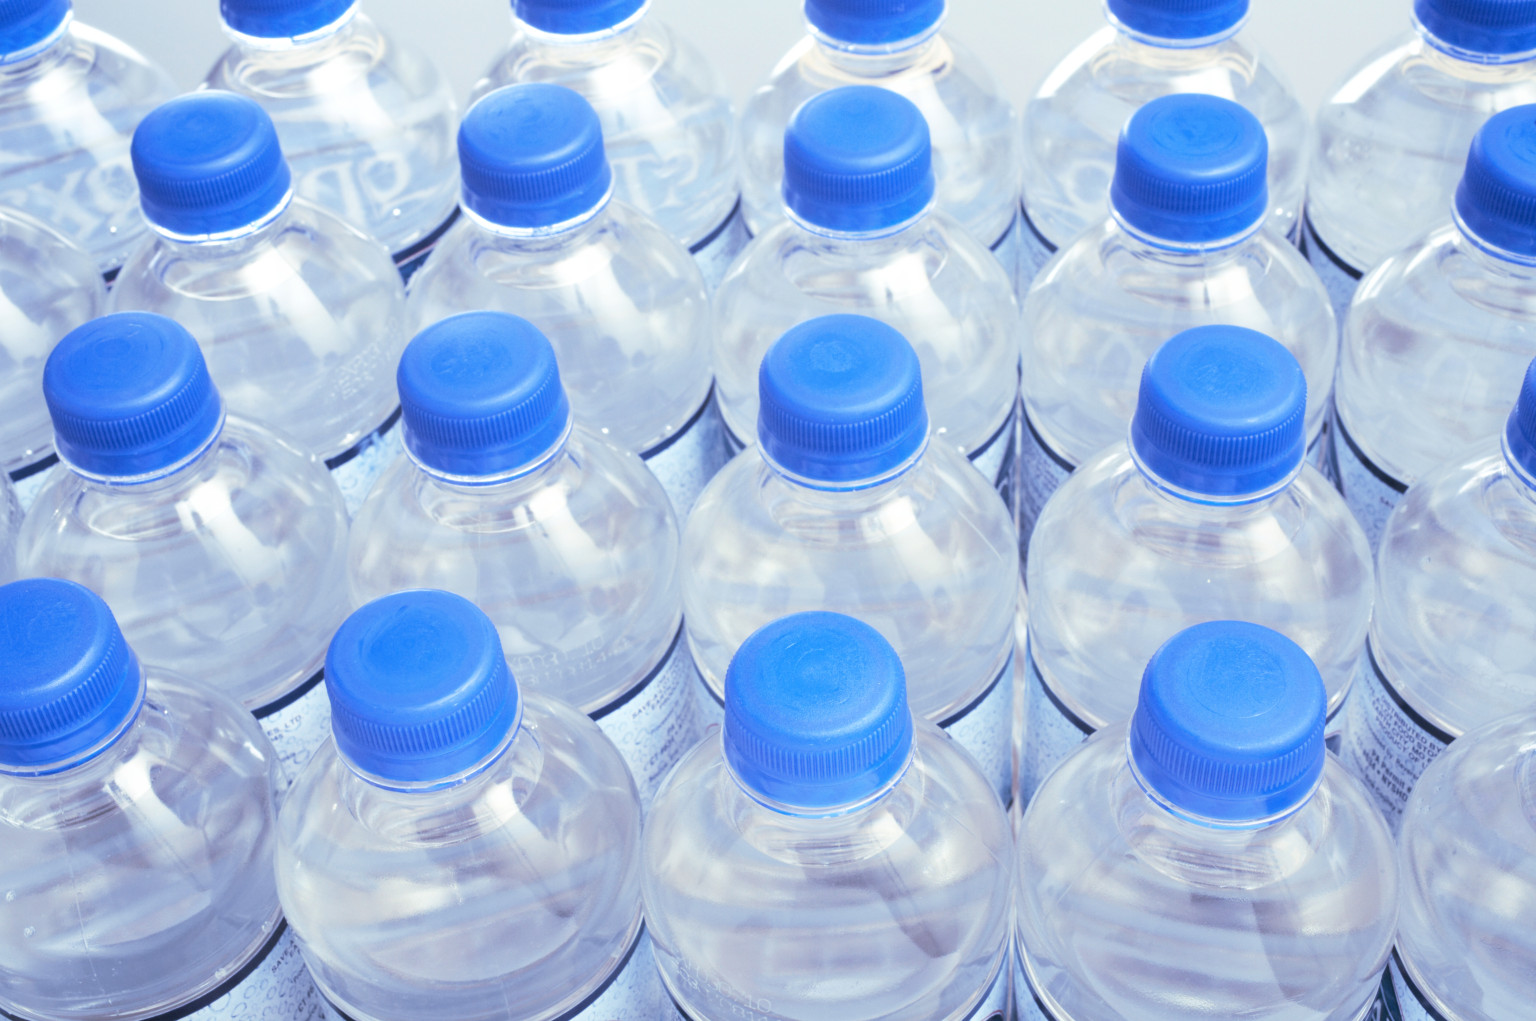 bottles of water